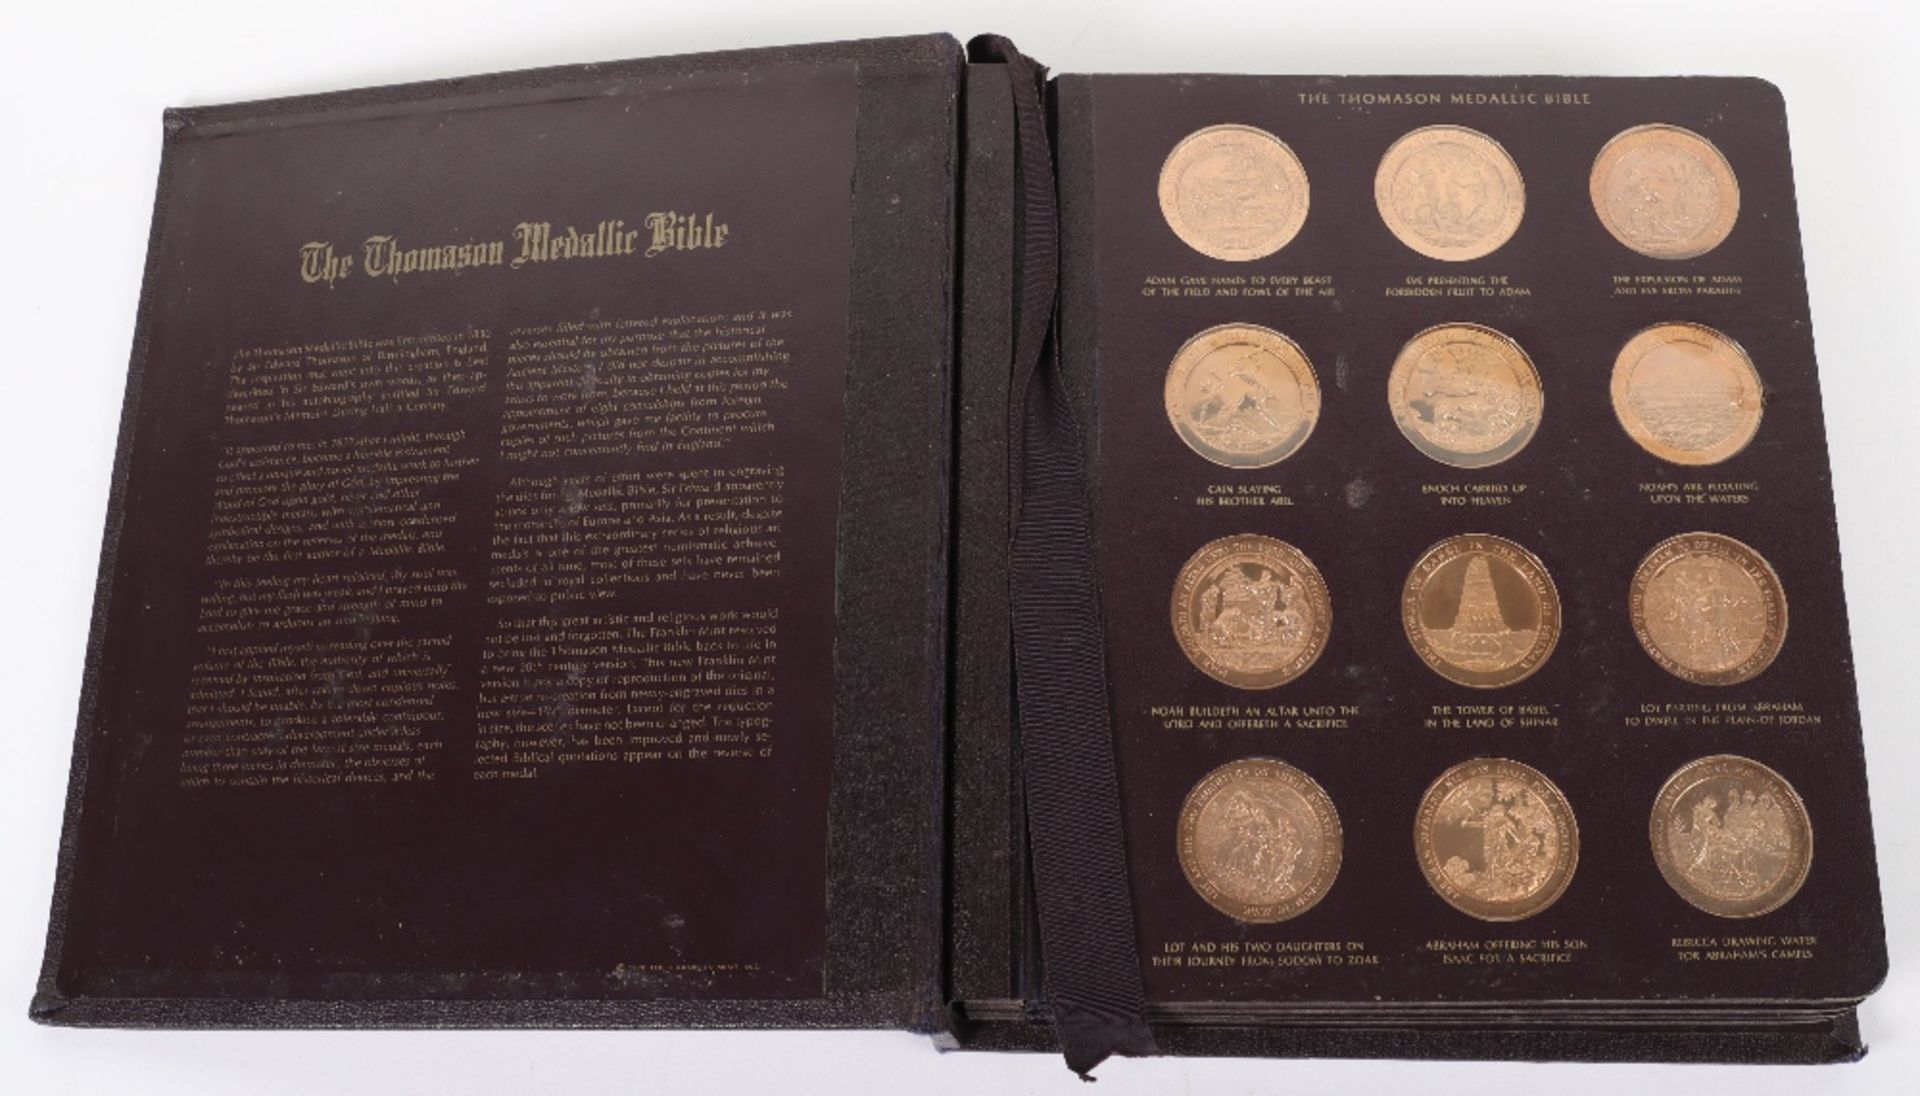 Franklin Mint, Thomason Medallic Bible